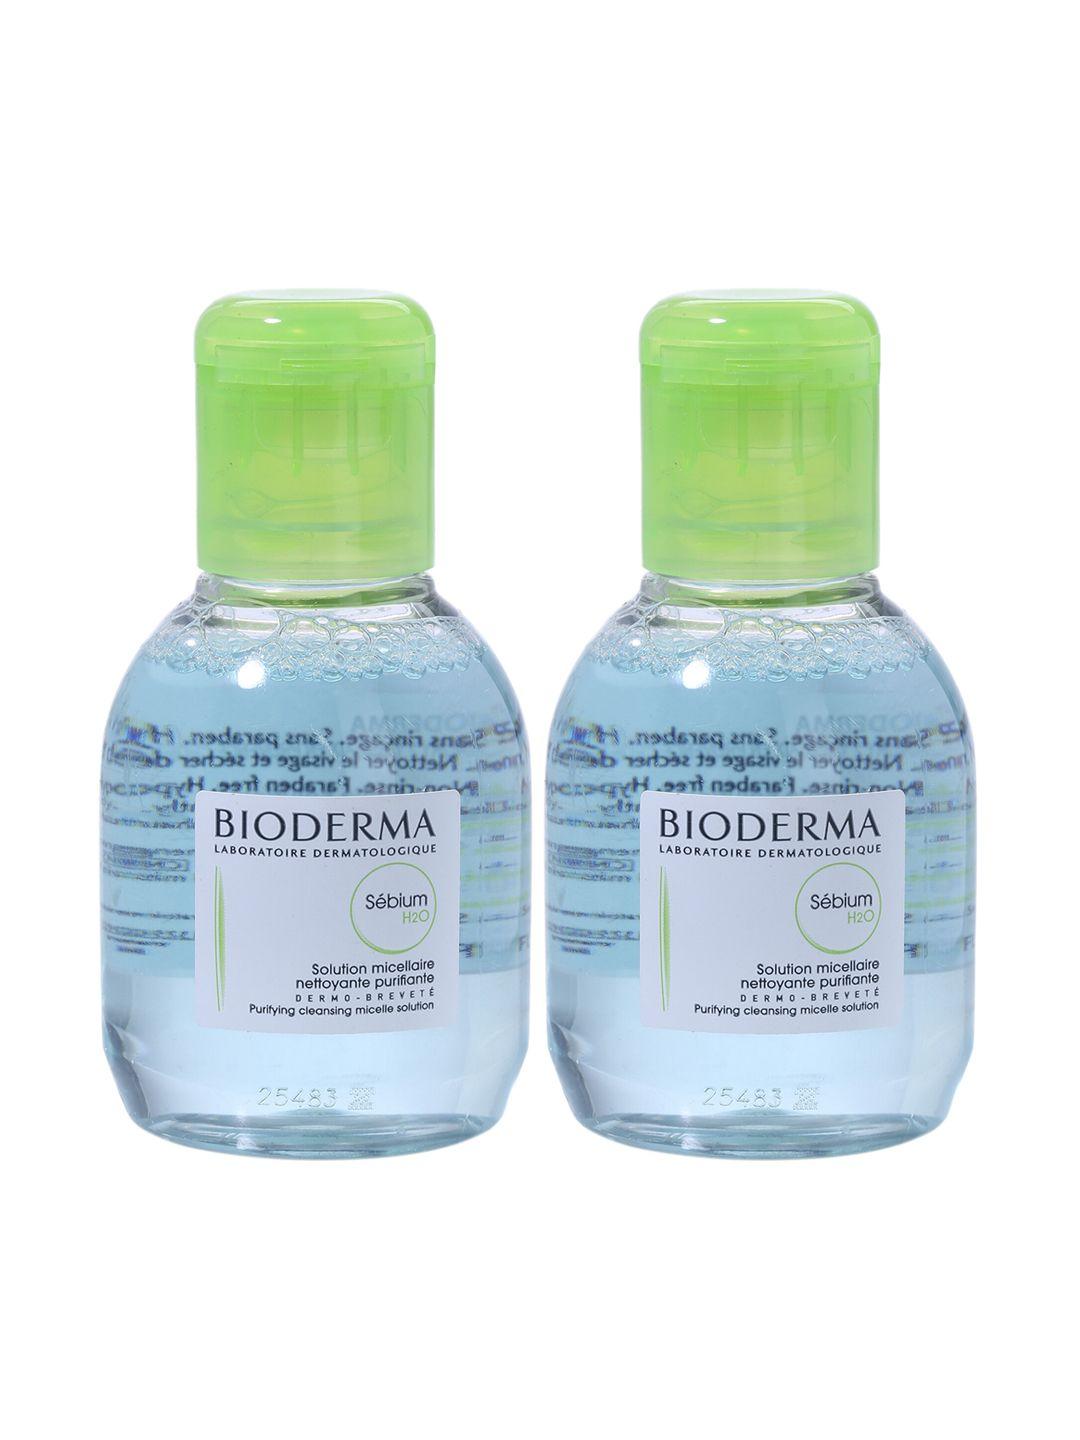 bioderma set of 2 sebium h2o purifying micellar cleansing water makeup remover 100 ml each